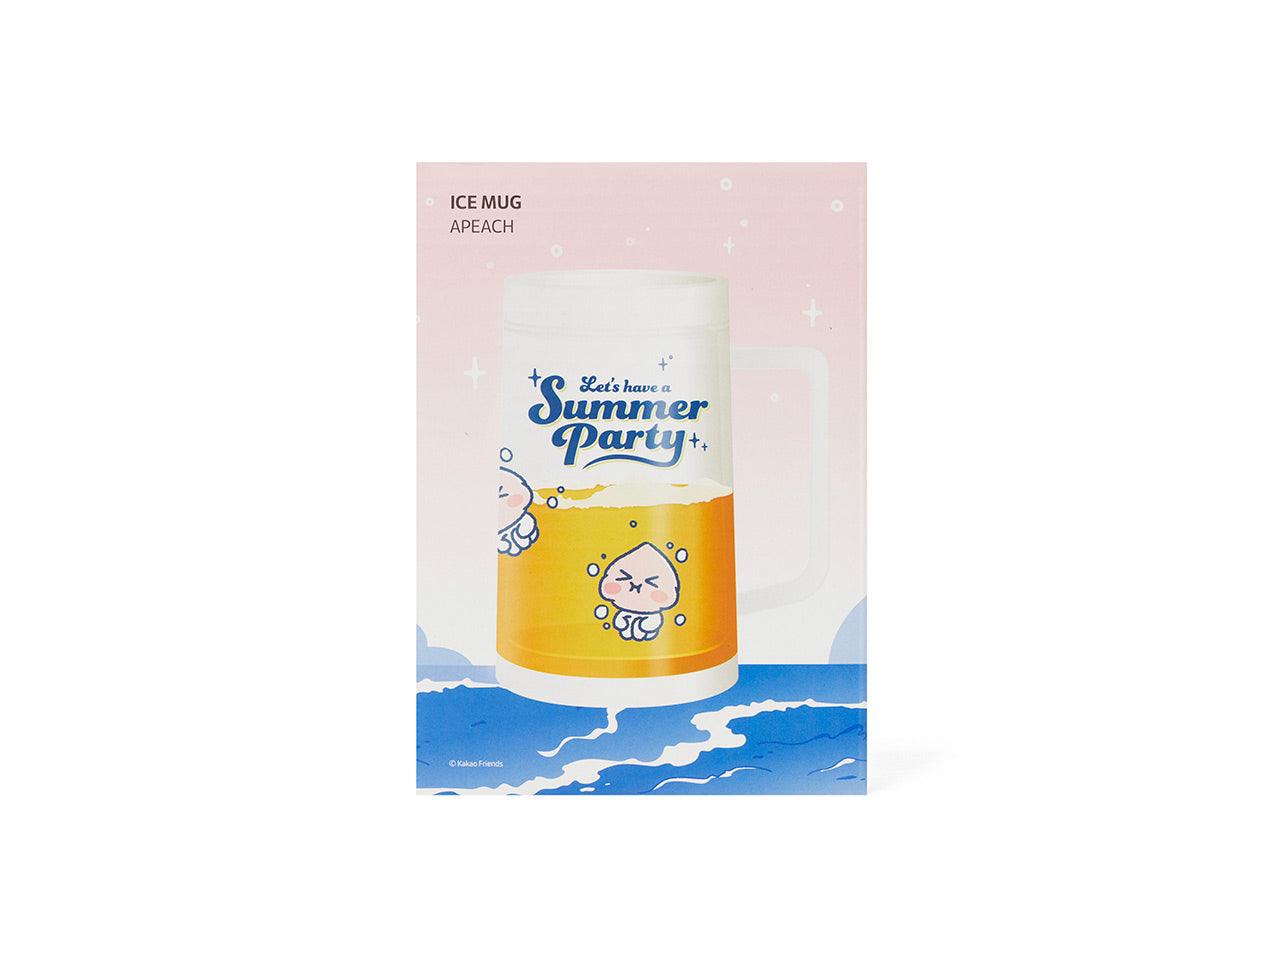 Kakao Friends Apeach Ice Mug 啤酒杯 355ml - SOUL SIMPLE HK